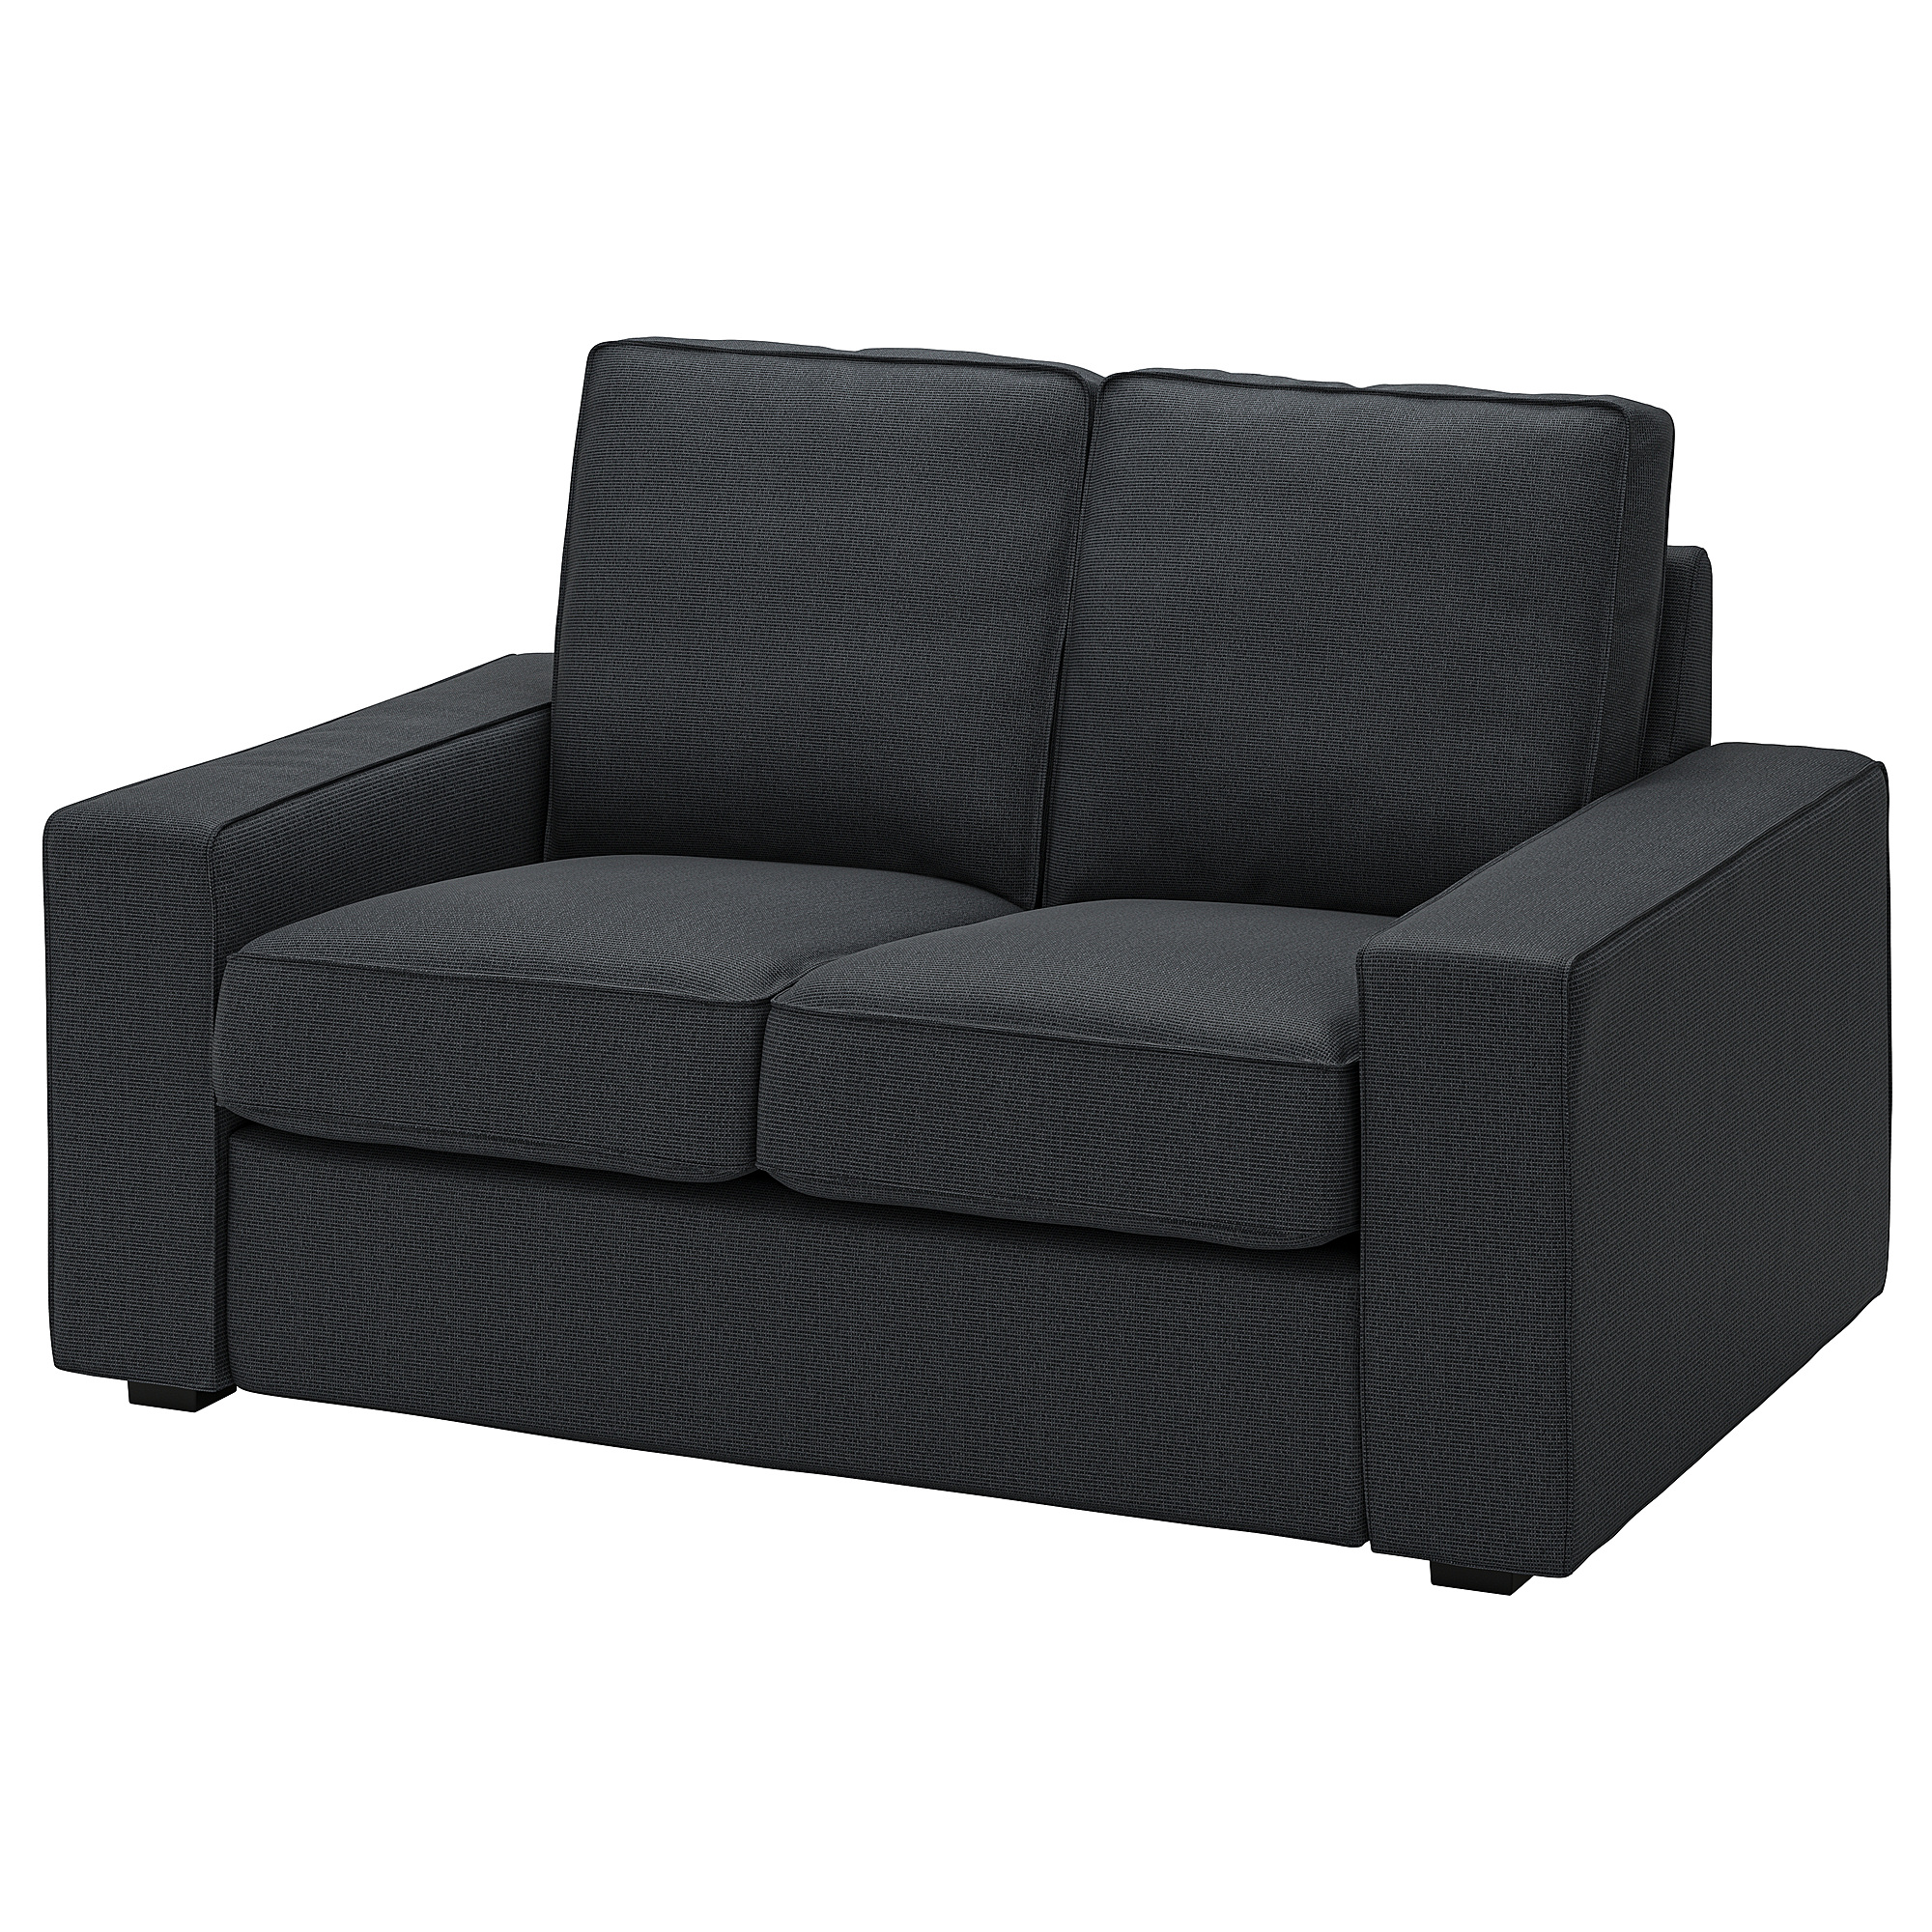 KIVIK compact 2-seat sofa